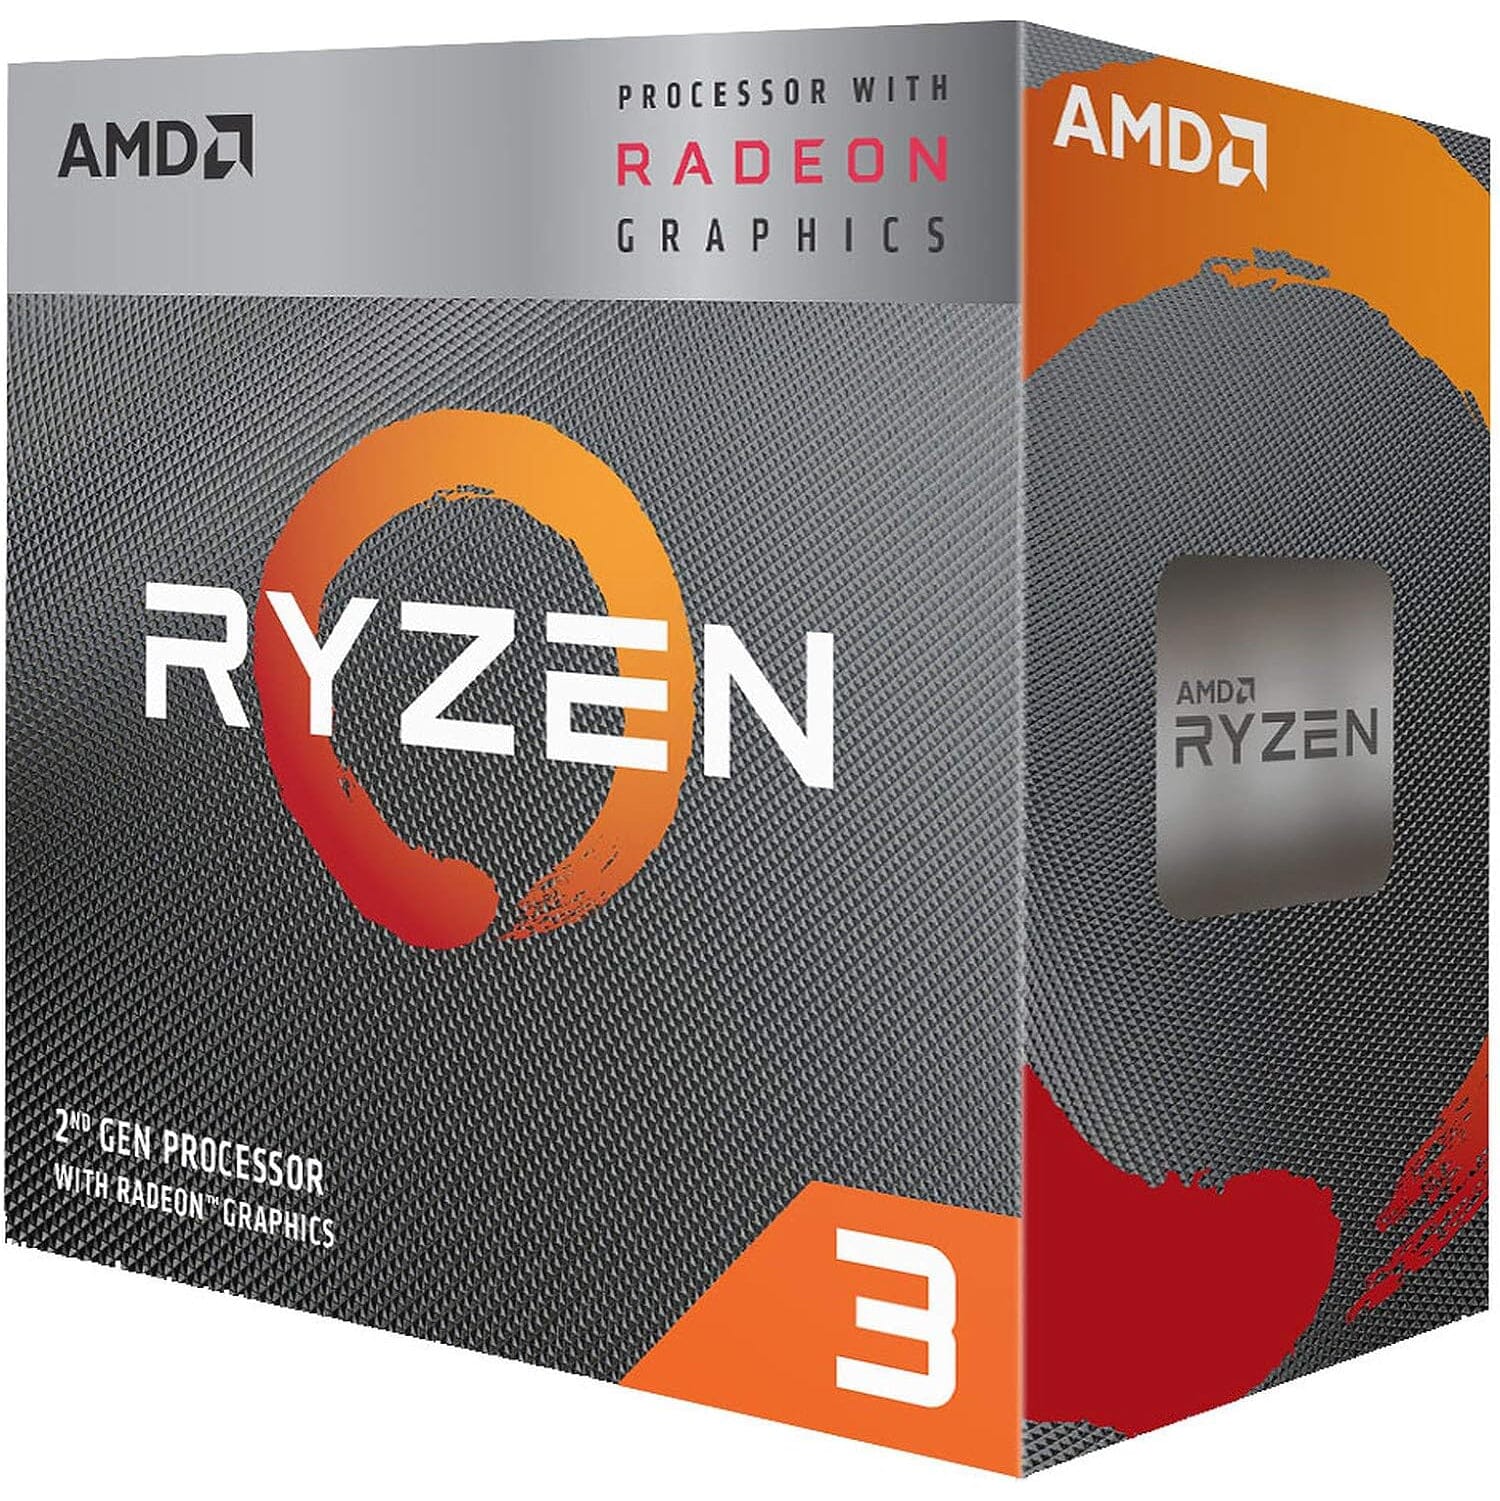 DailySale AMD Ryzen 3 3200G 4-Core Unlocked Desktop Processor with Radeon Graphics (Refurbished)